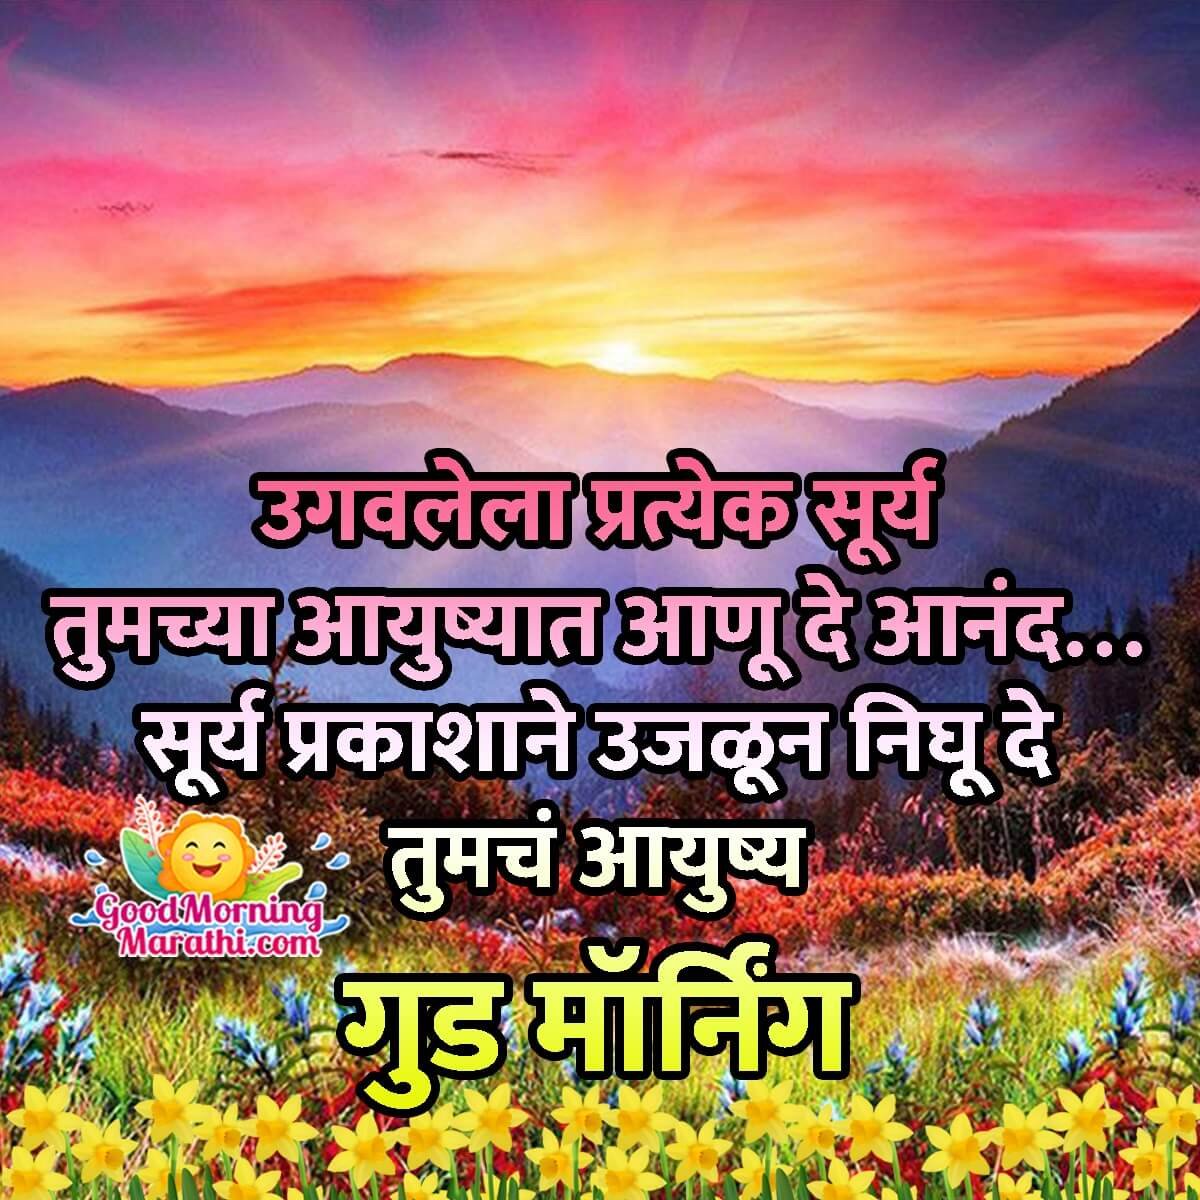 Beautiful Morning Wish In Marathi